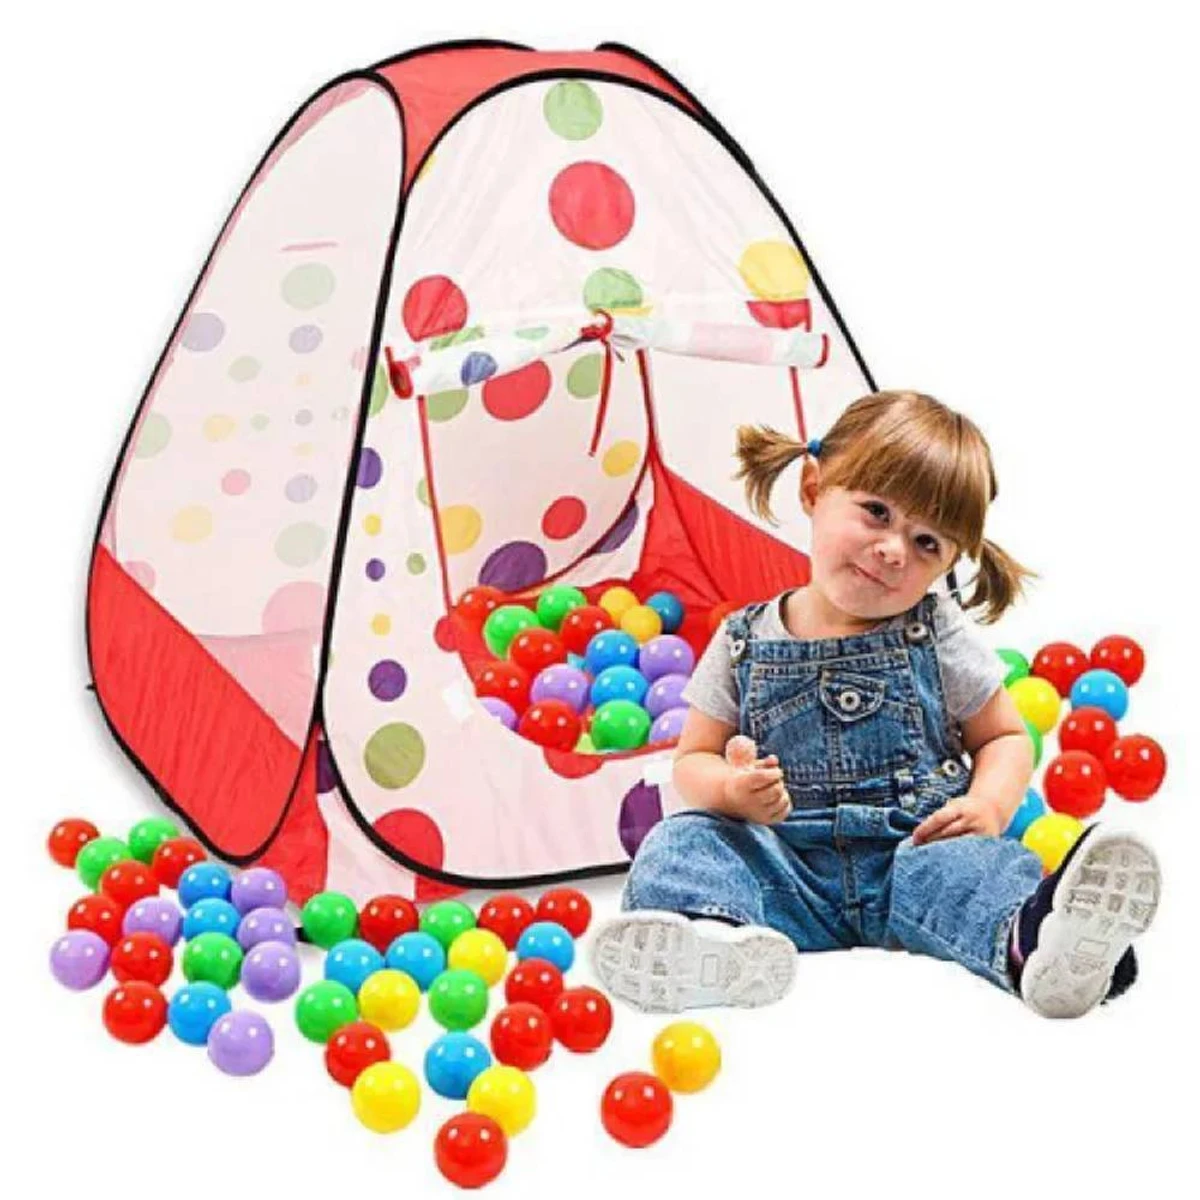 Tent Play House - Ball: 100 pcs